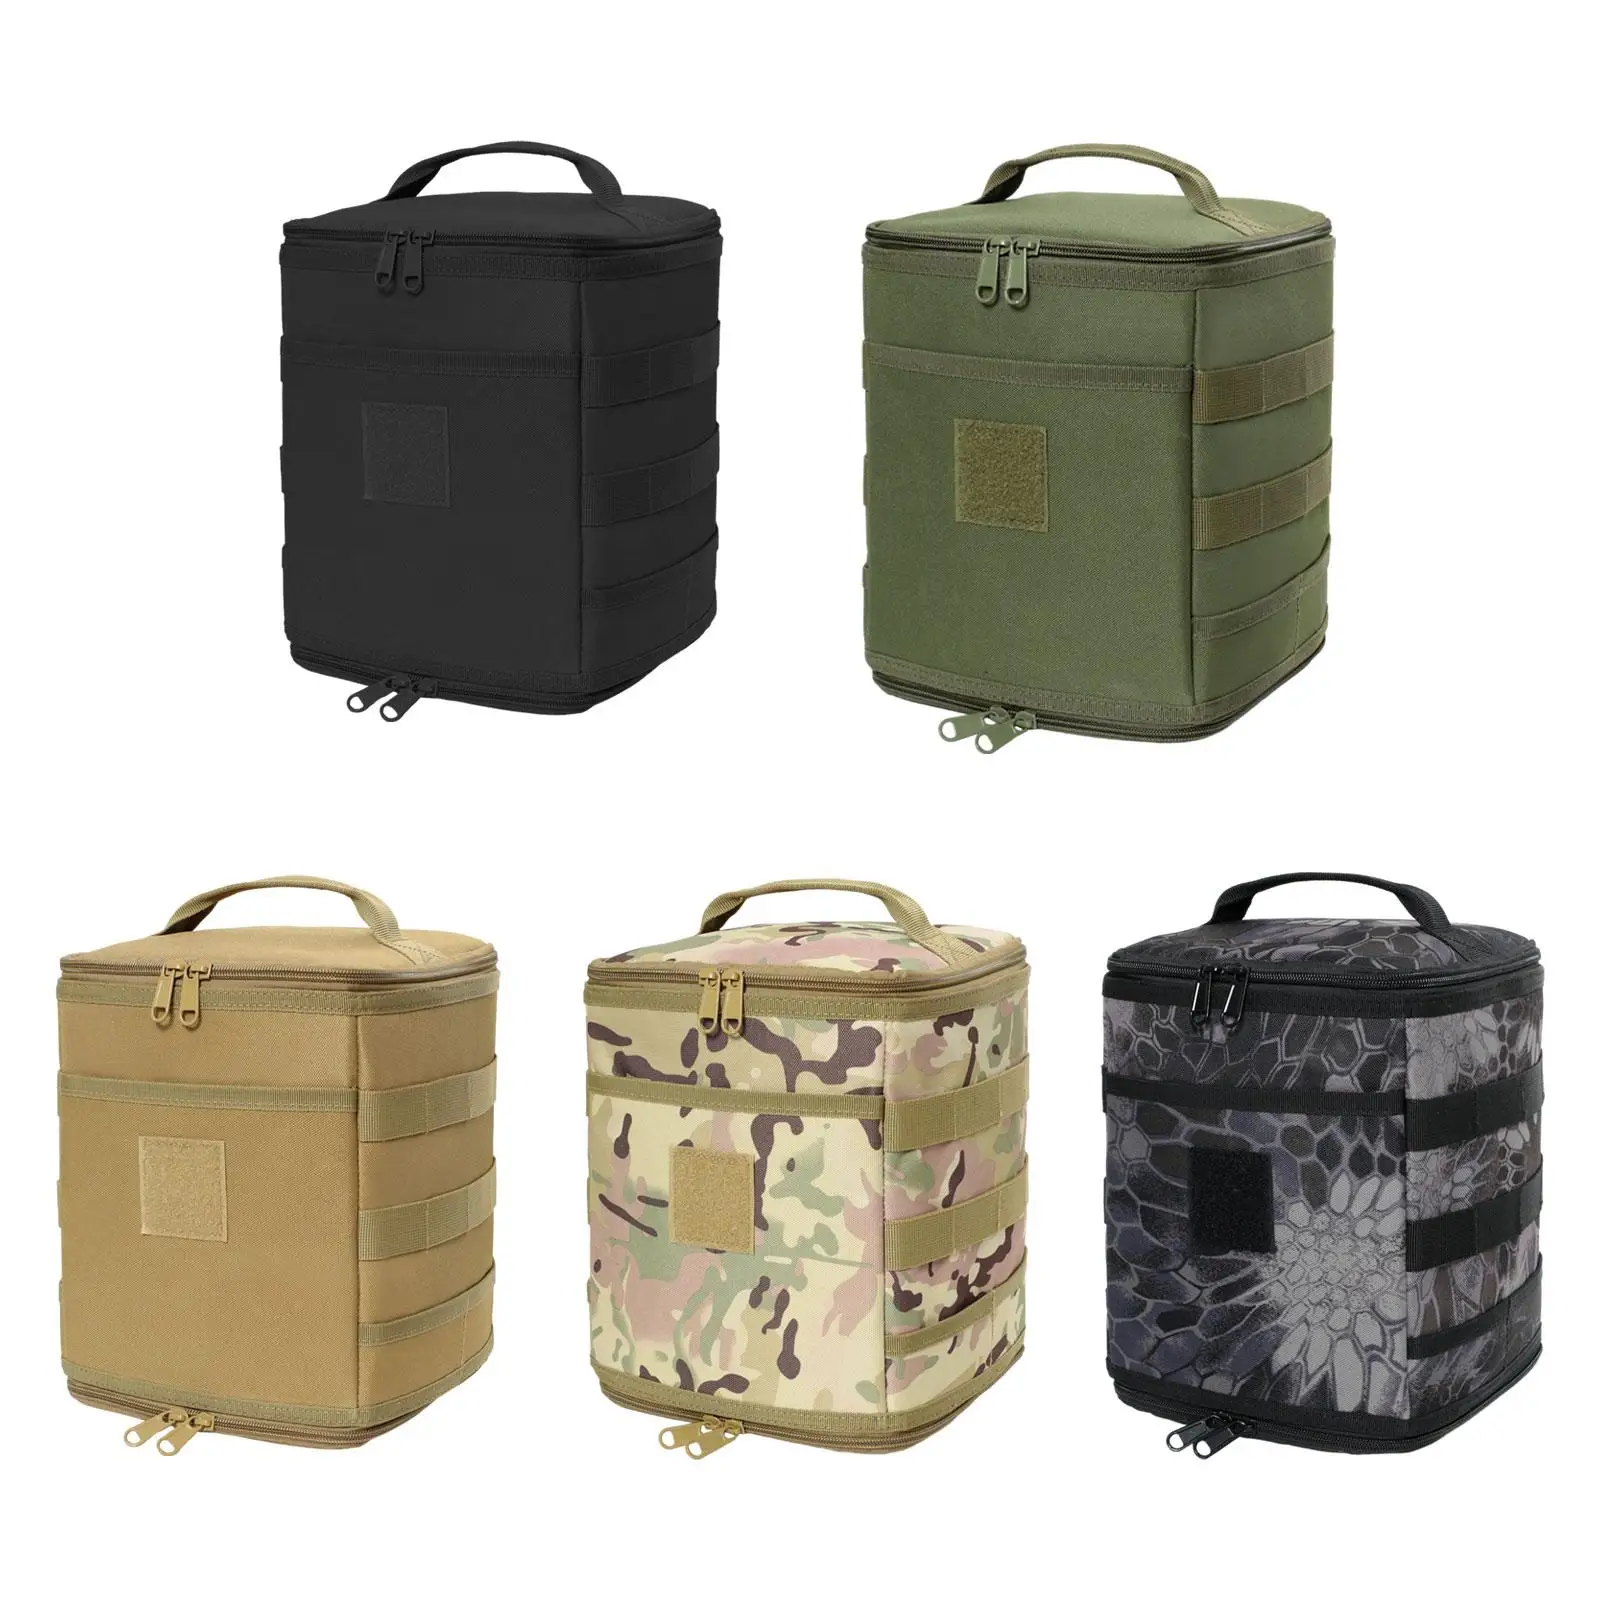 Gas Tank Storage Bag Portable Multifunction Camping Lantern Bag Storage Organizer for Cooking Camping Travel Backpacking Outdoor